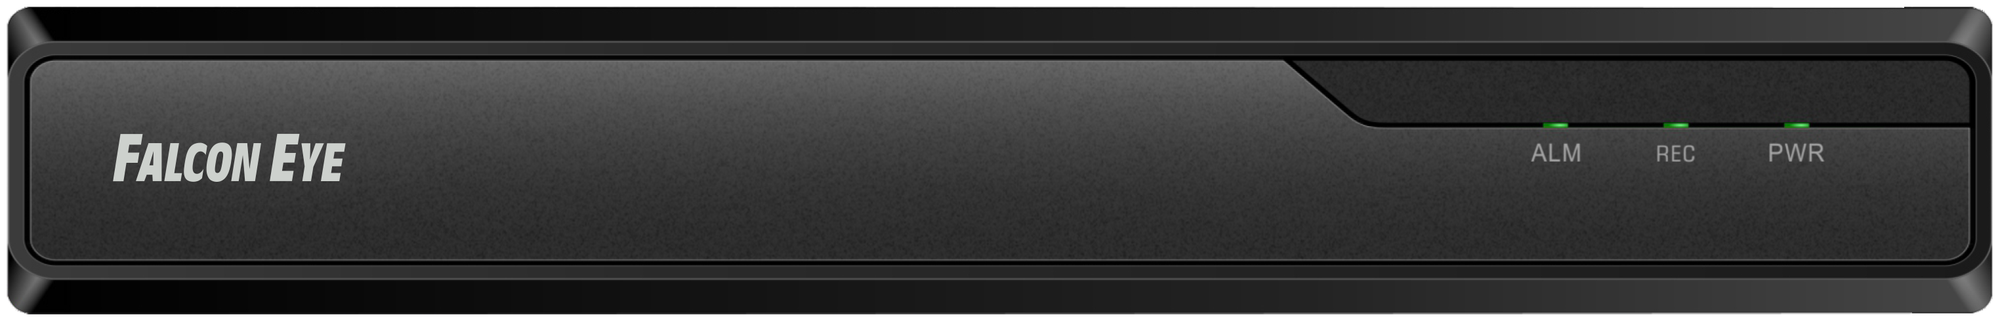 Видеорегистратор Falcon Eye FE-MHD1108 8 канальный: запись 8кан 1080N*15к/с; Н.264/H264+; HDMI, VGA, SATA*1 (до 6TБ HDD), 2 USB; Аудио 1/1; ONVIF, RTS